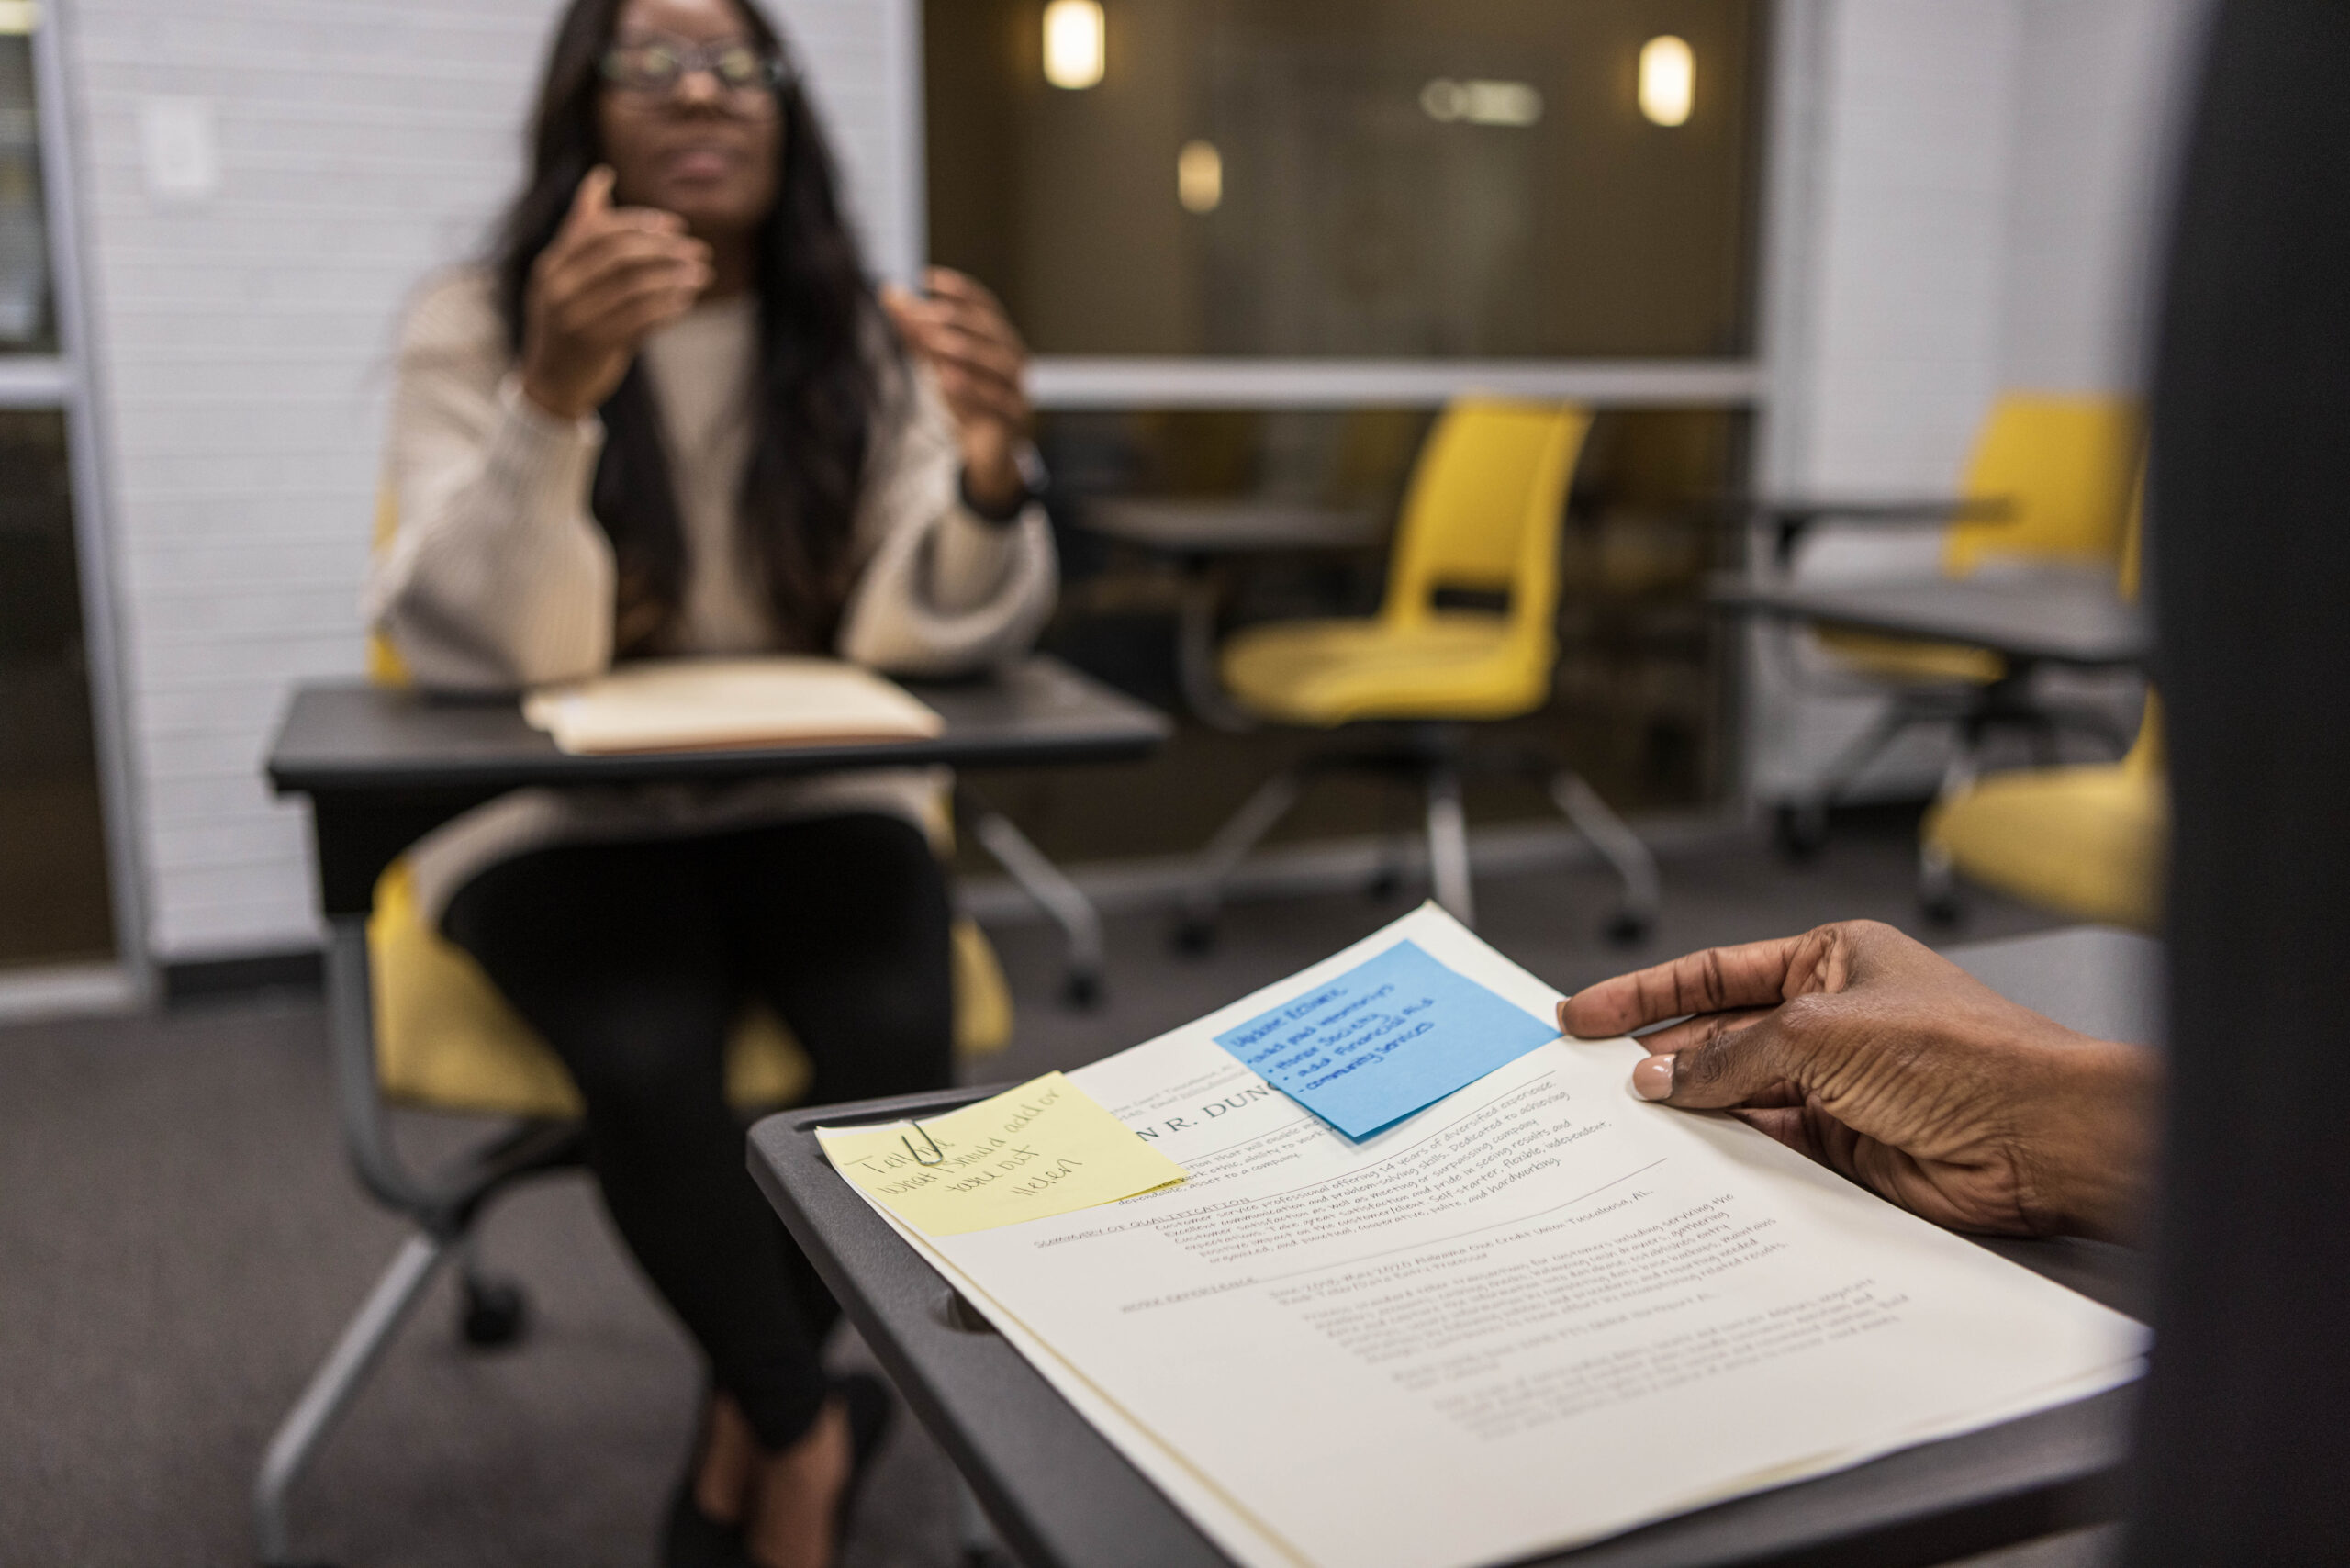 A black female college student participates in a mock job interview